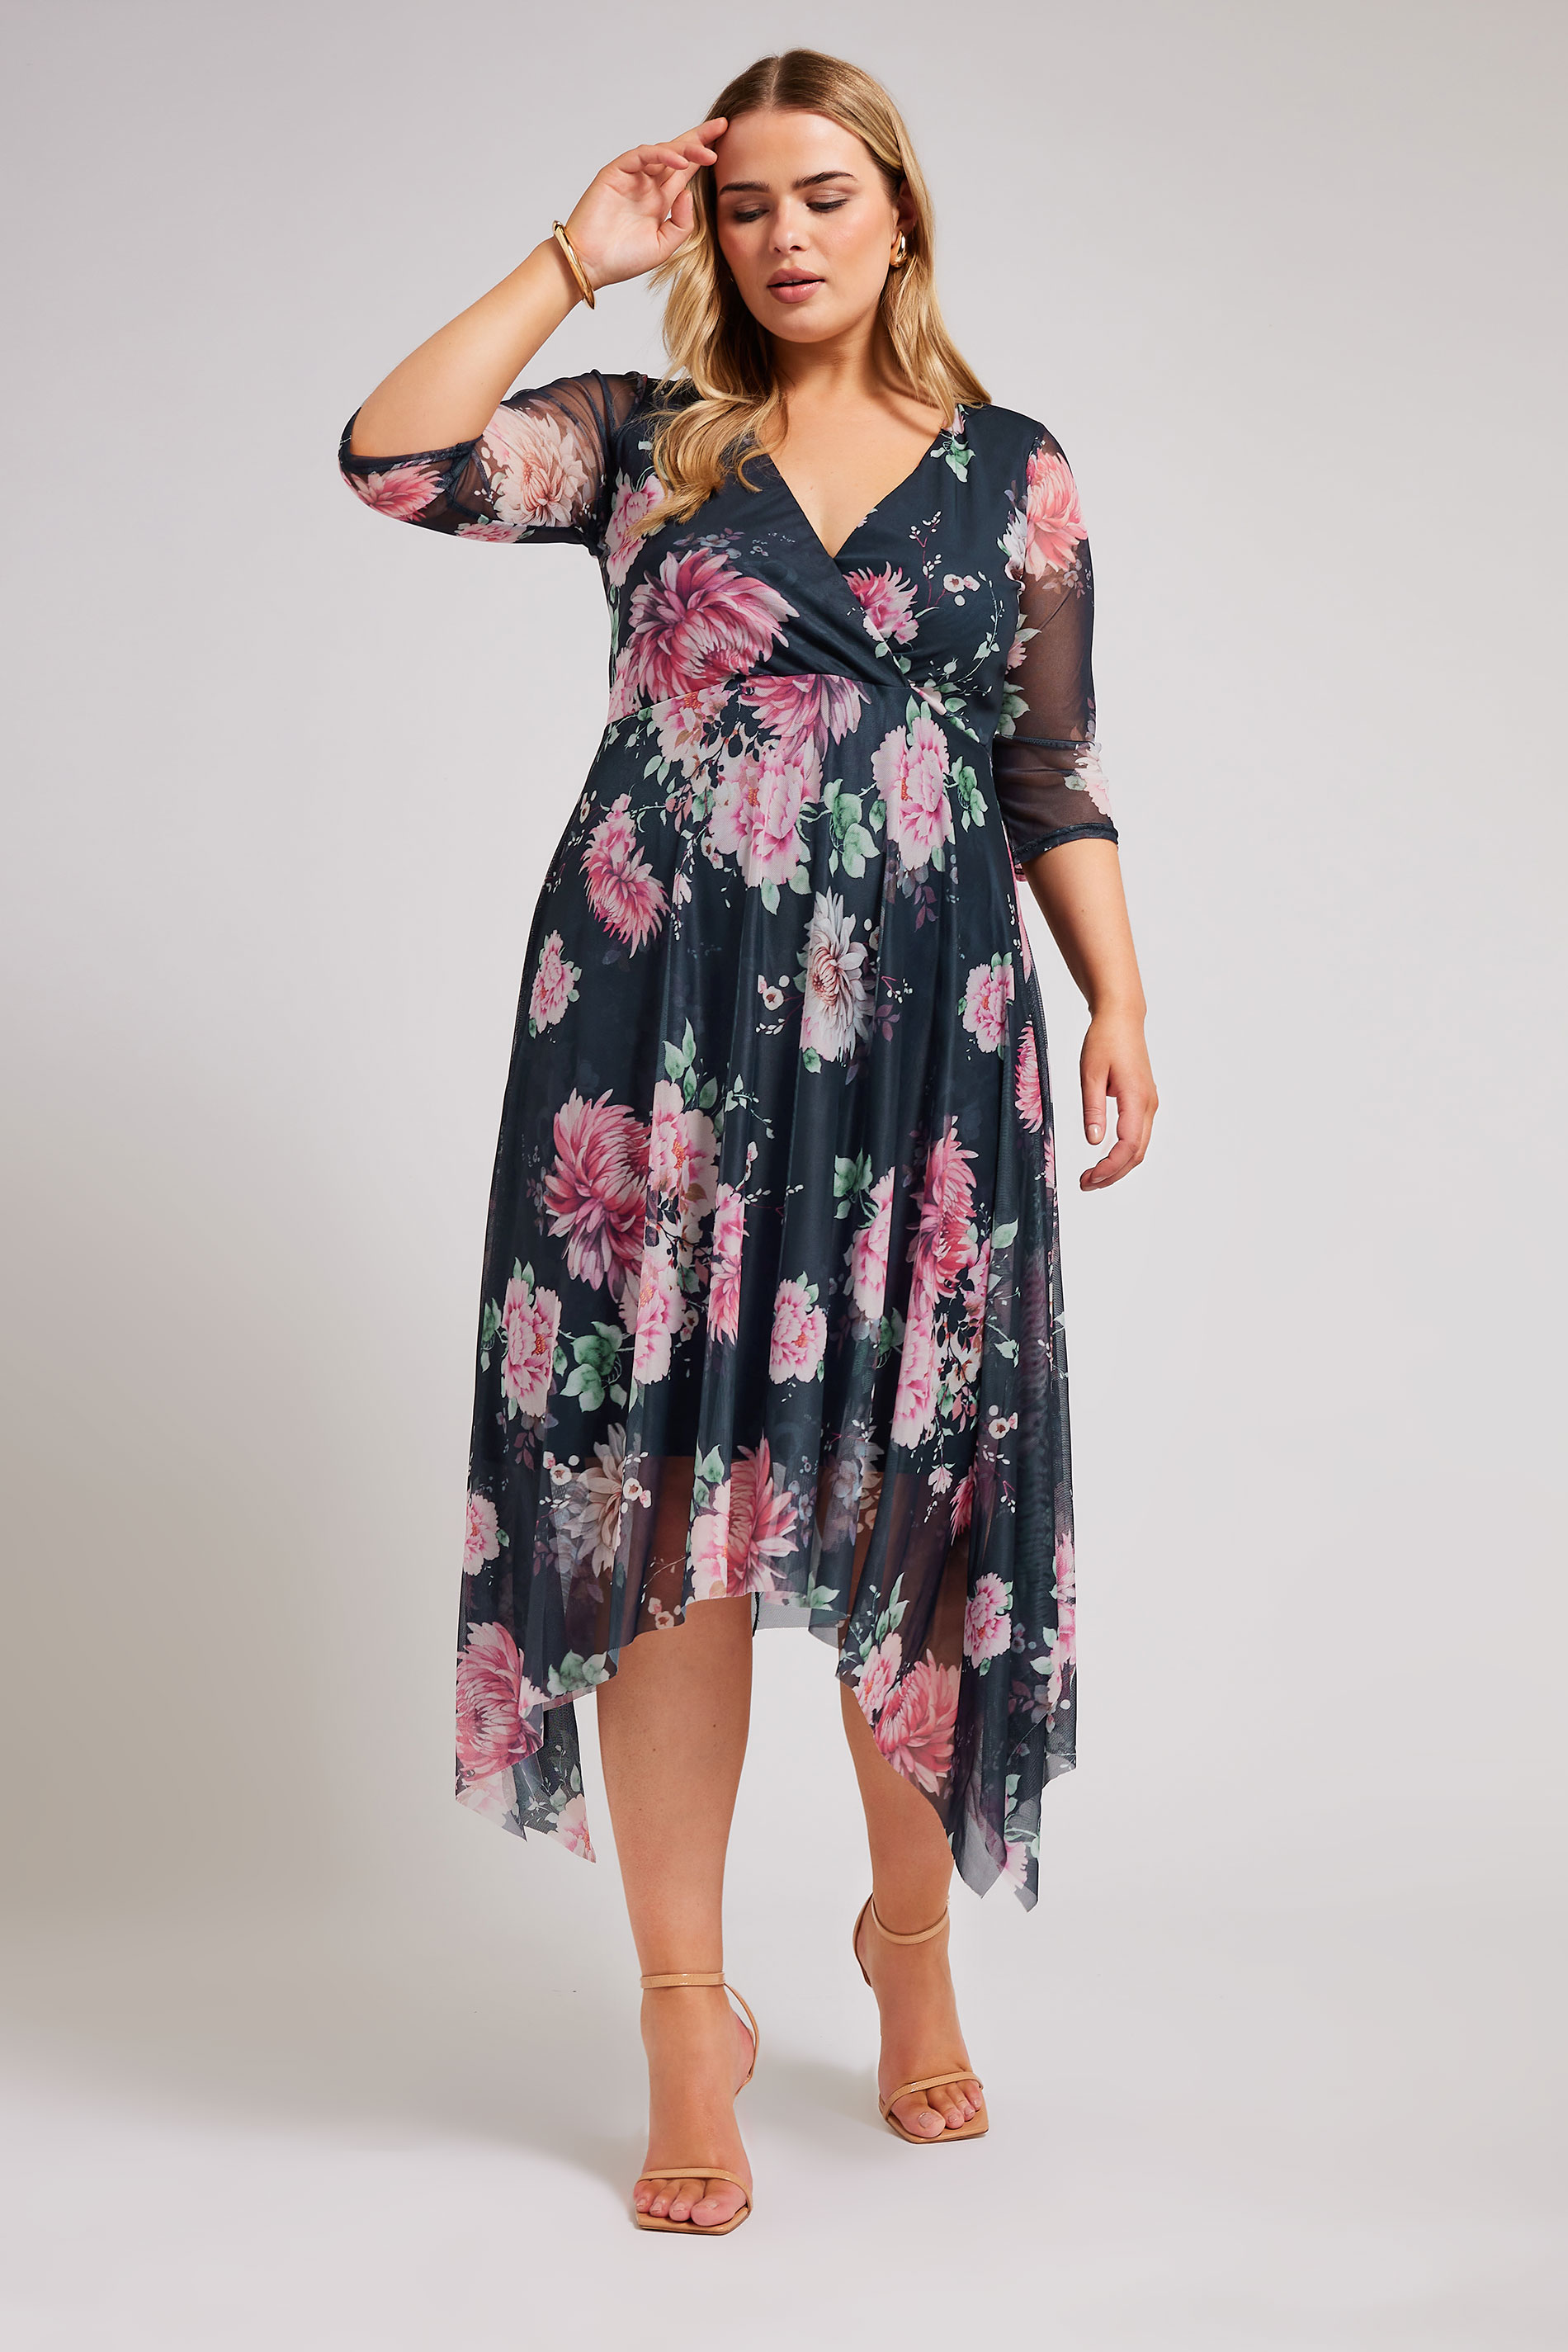 YOURS LONDON Plus Size Black Floral Print Wrap Midi Dress | Yours Clothing 2